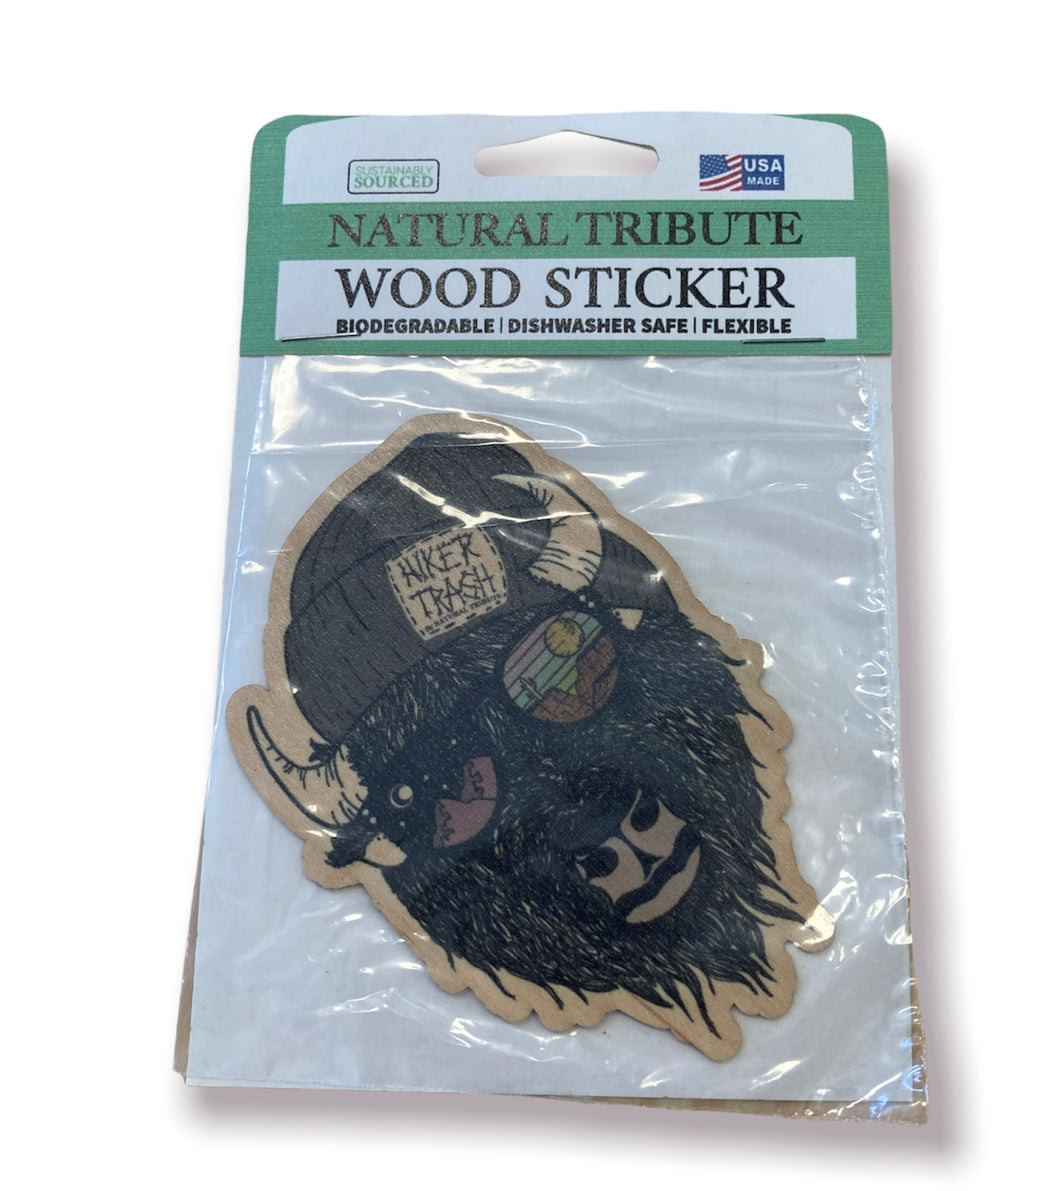 Hiker Trash Bison - Wooden Sticker